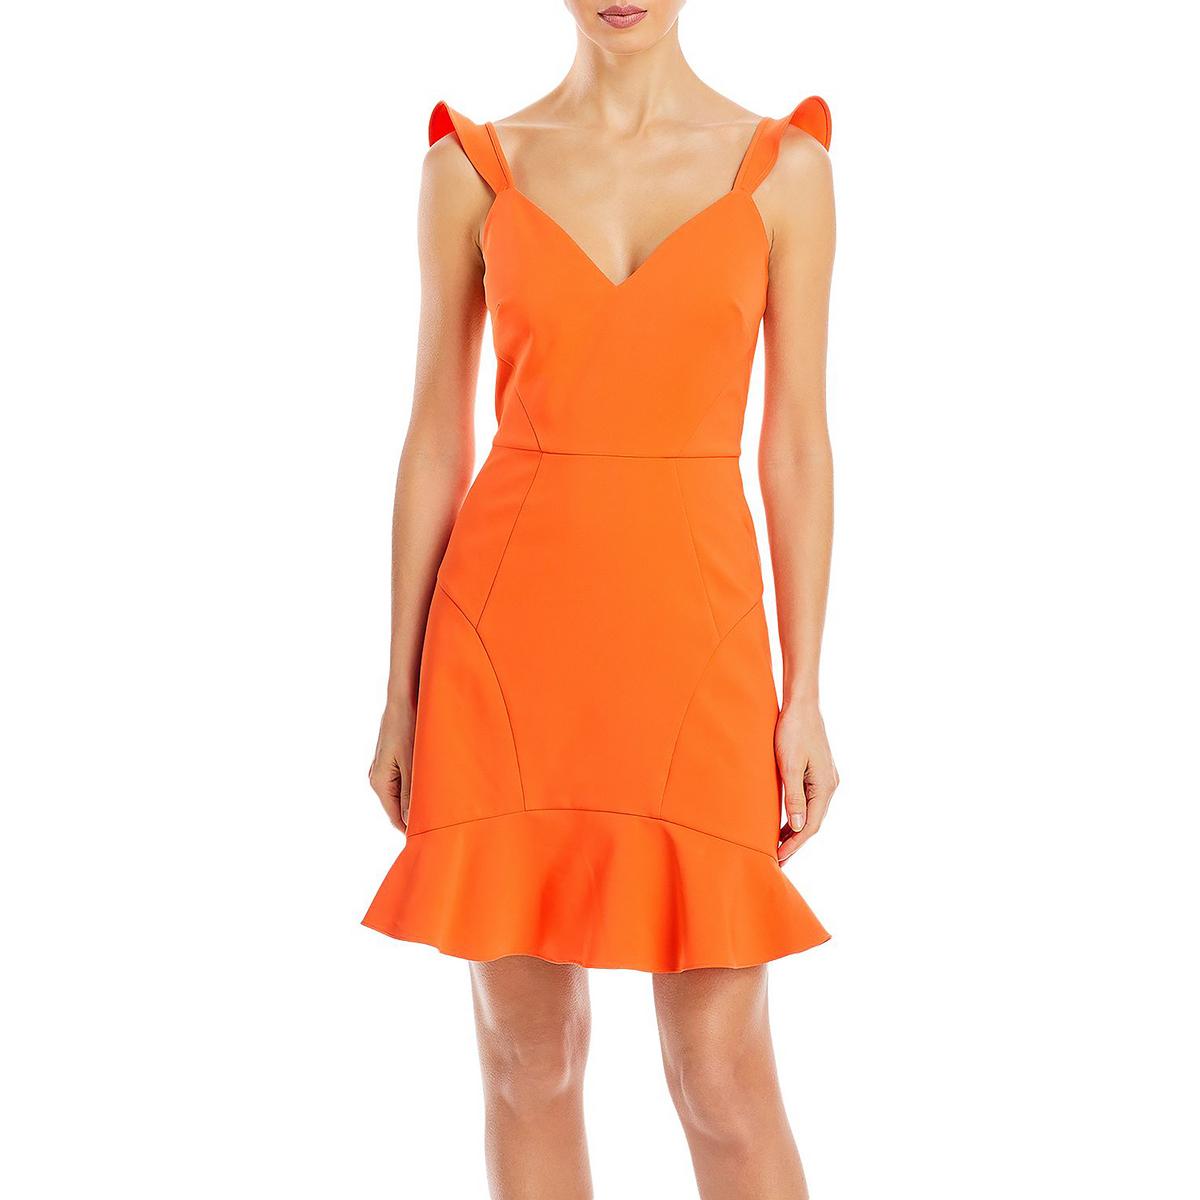 Orange Tie Dye Gown by Aidan AIDAN MATTOX for $50